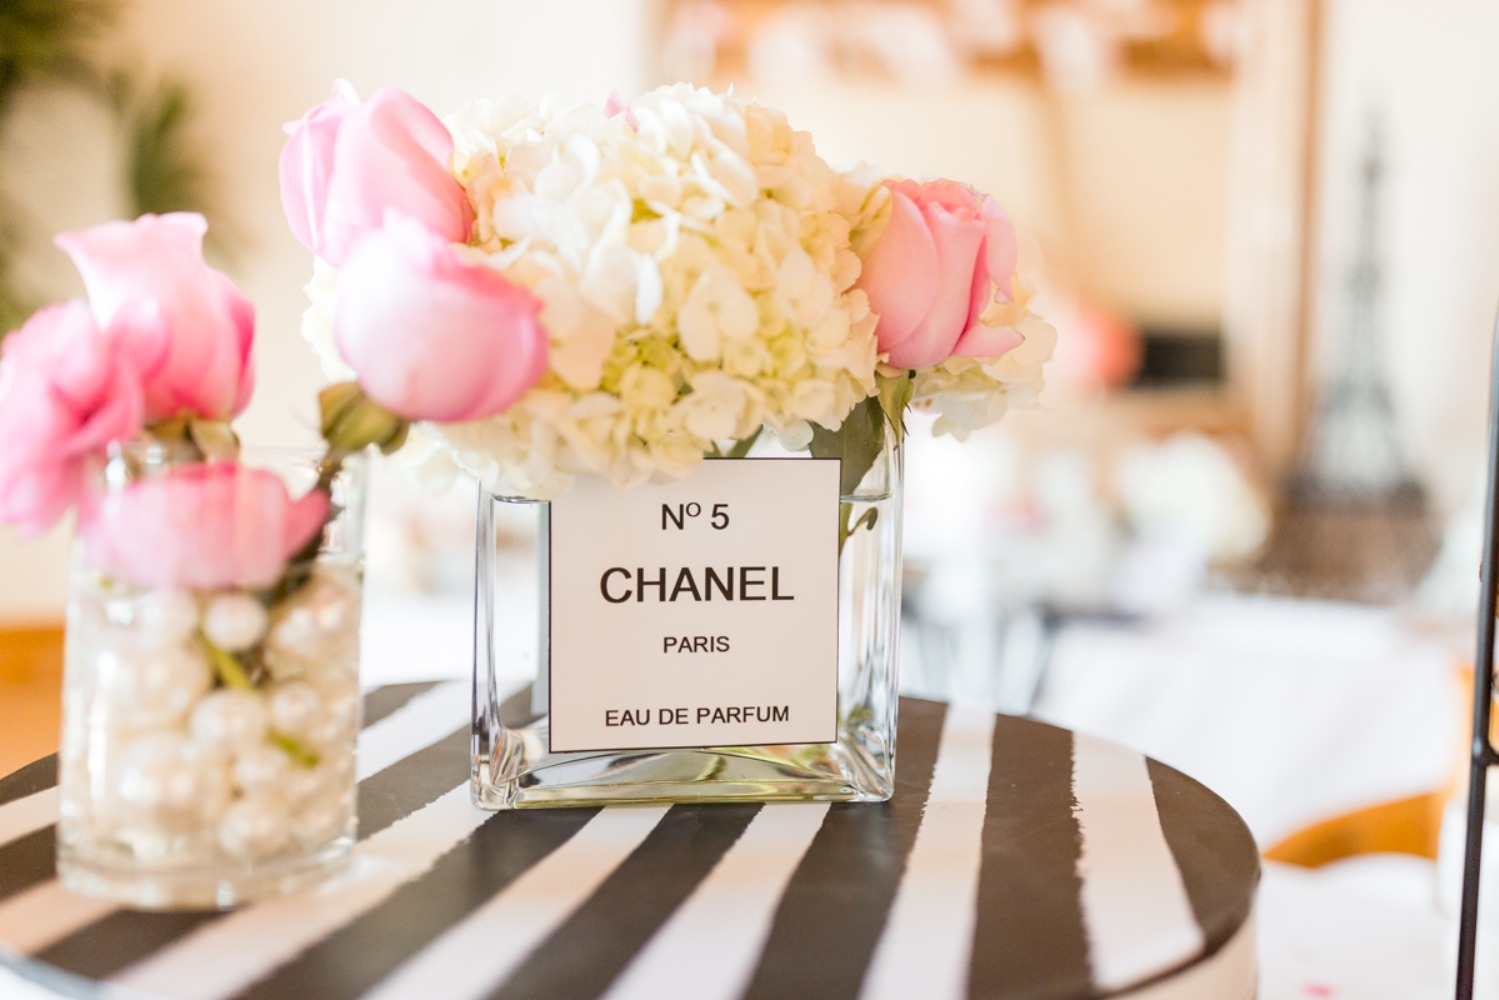 Chanel No 5 flower vase